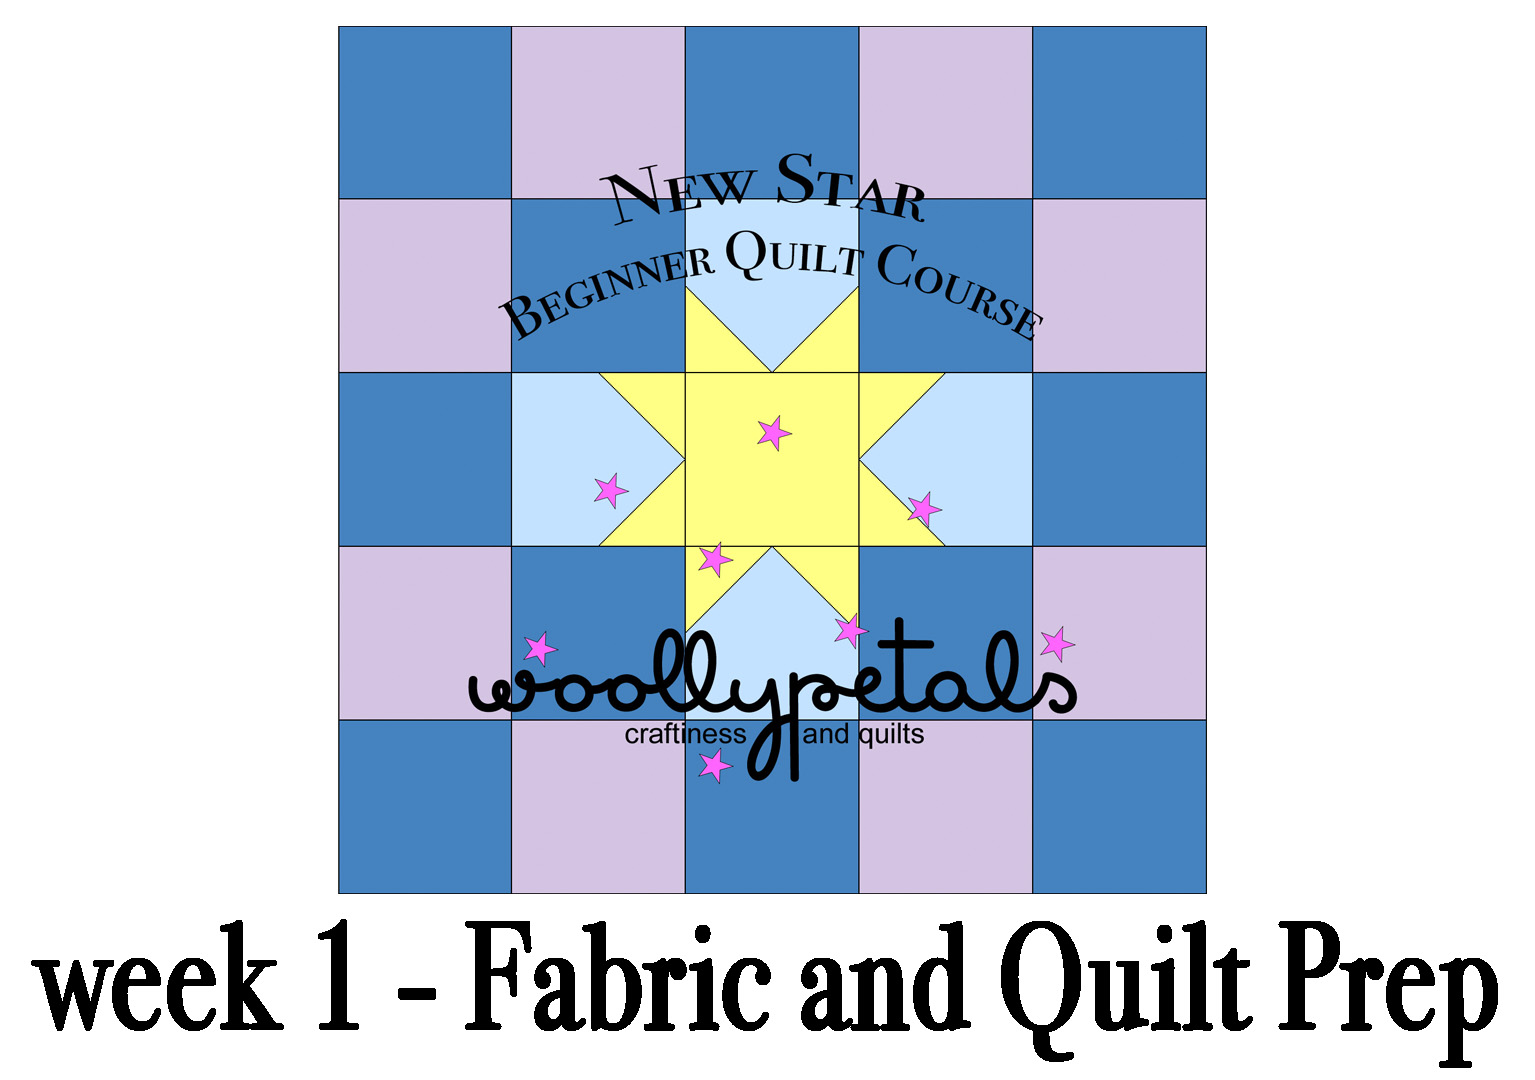 woollypetals New Star Beginner Quilt Course Week 1 Post